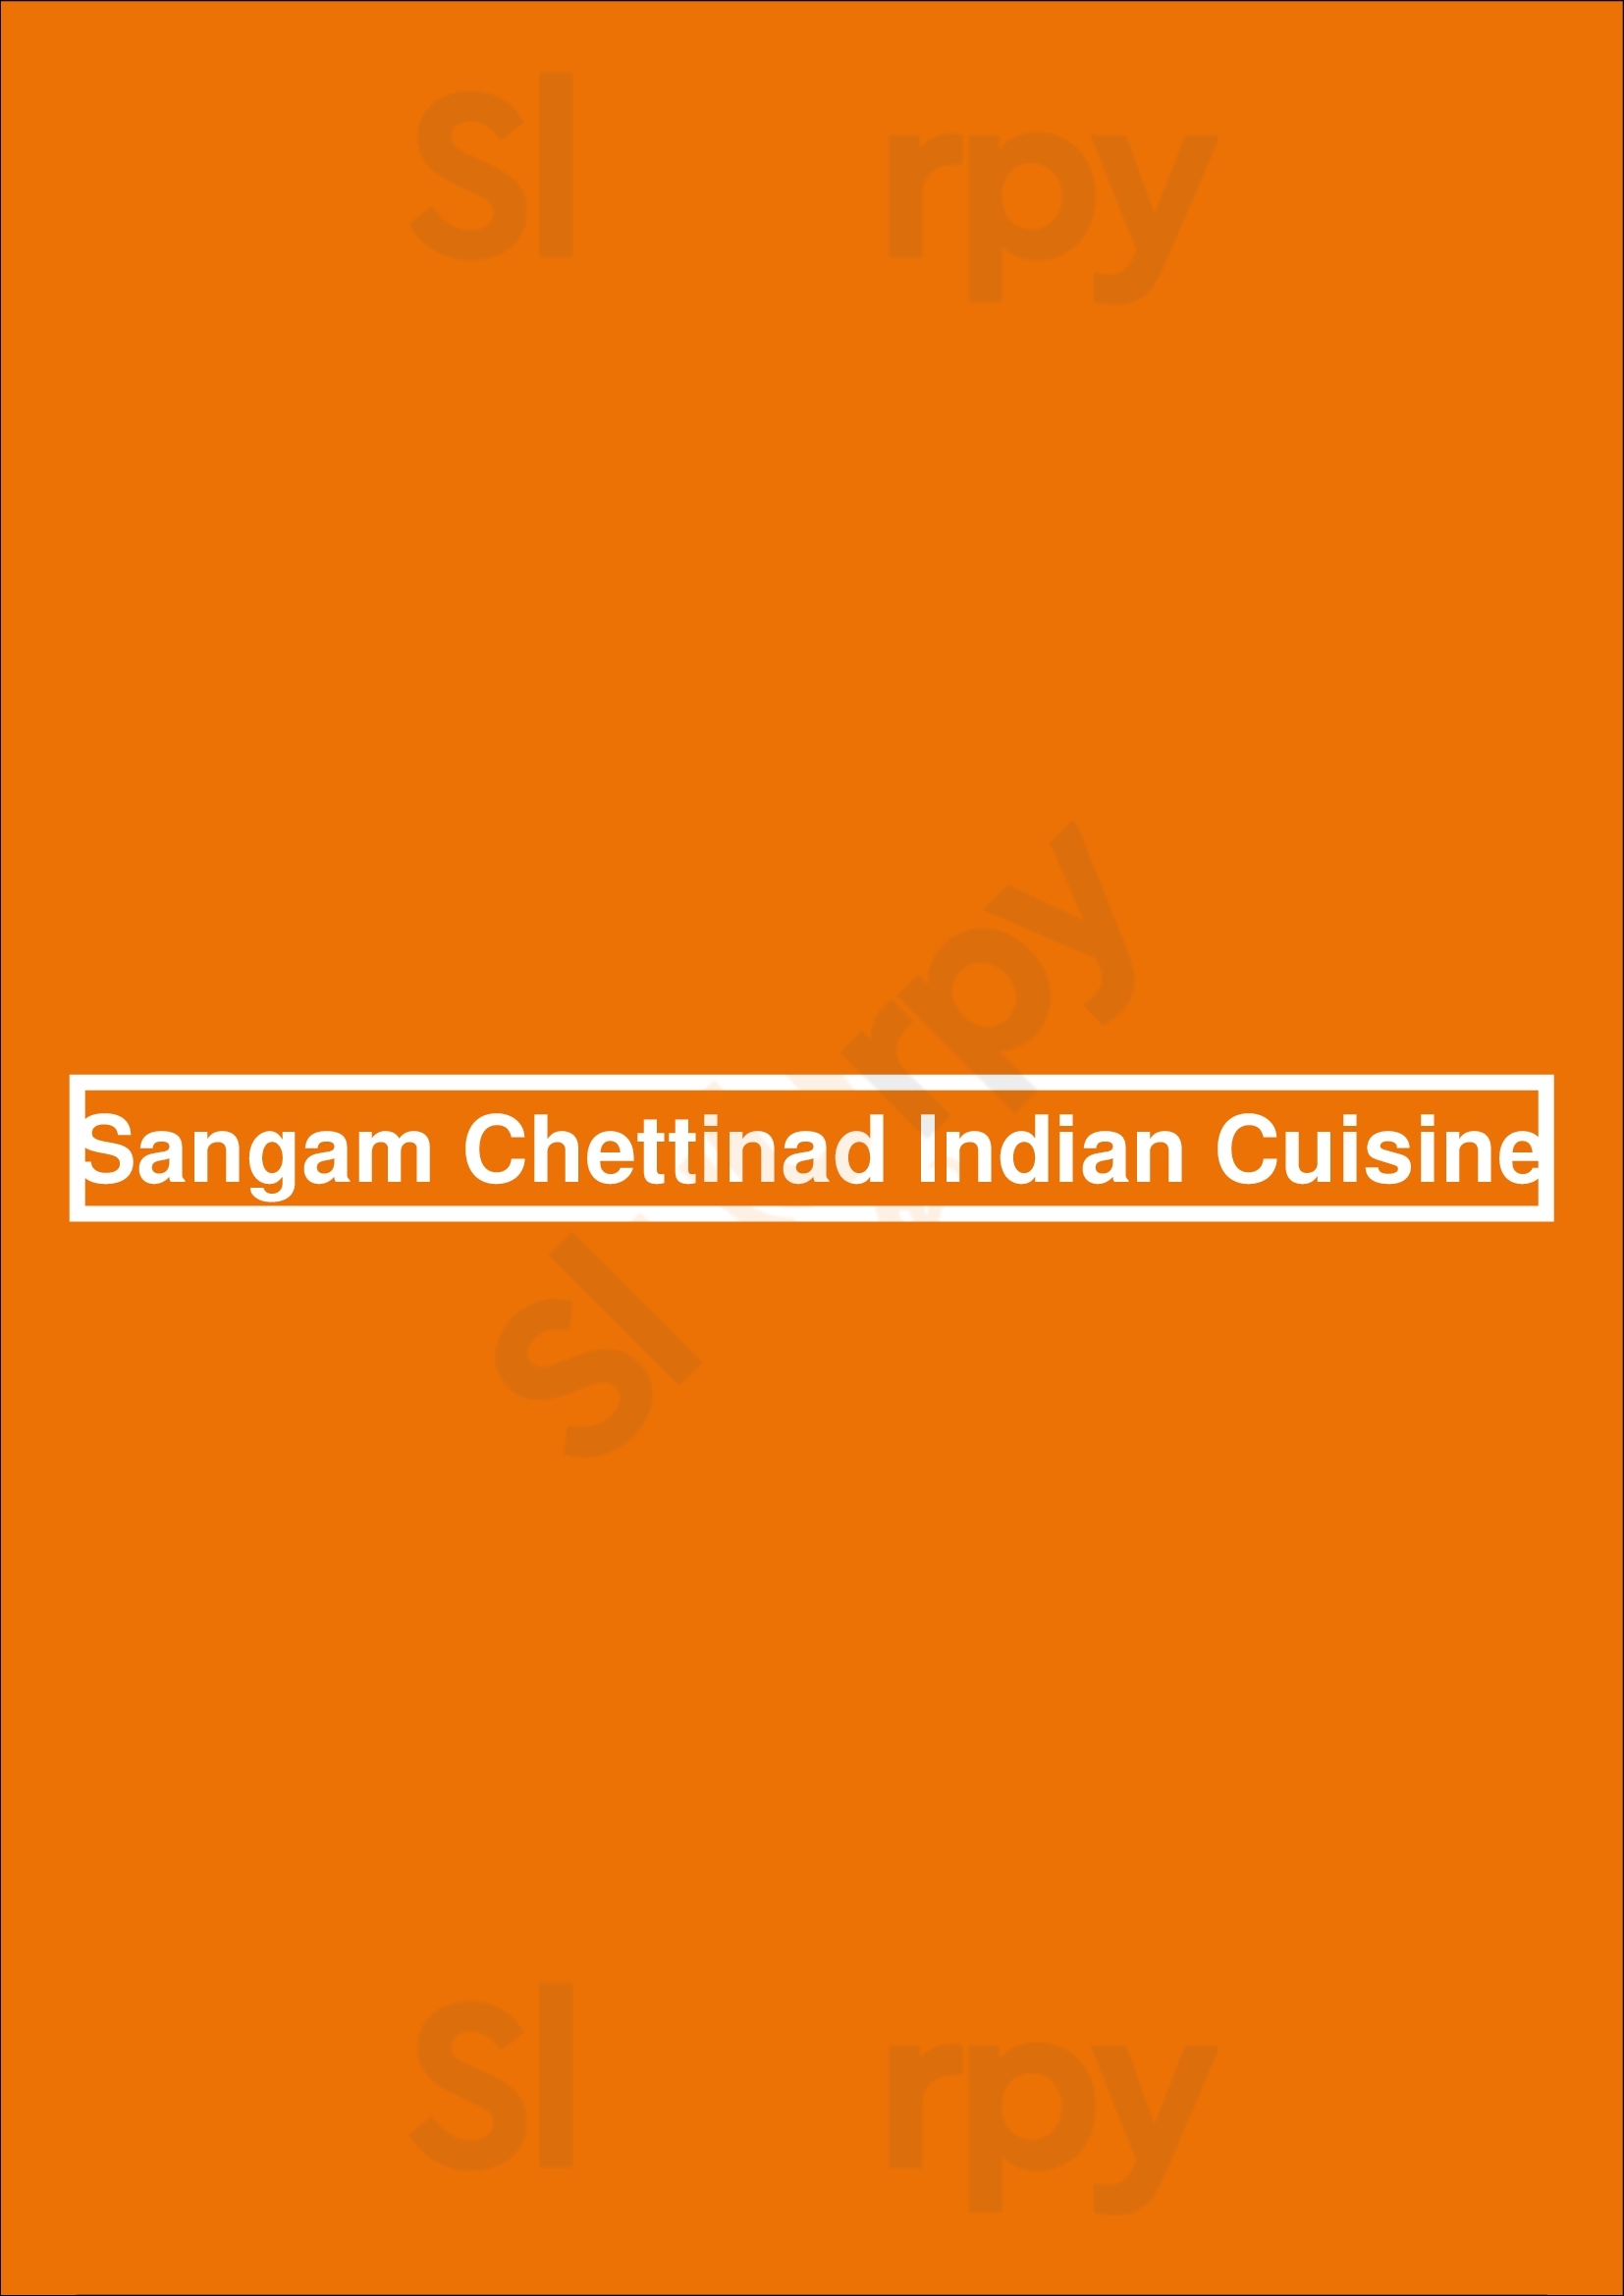 Sangam Chettinad Indian Cuisine Houston Menu - 1